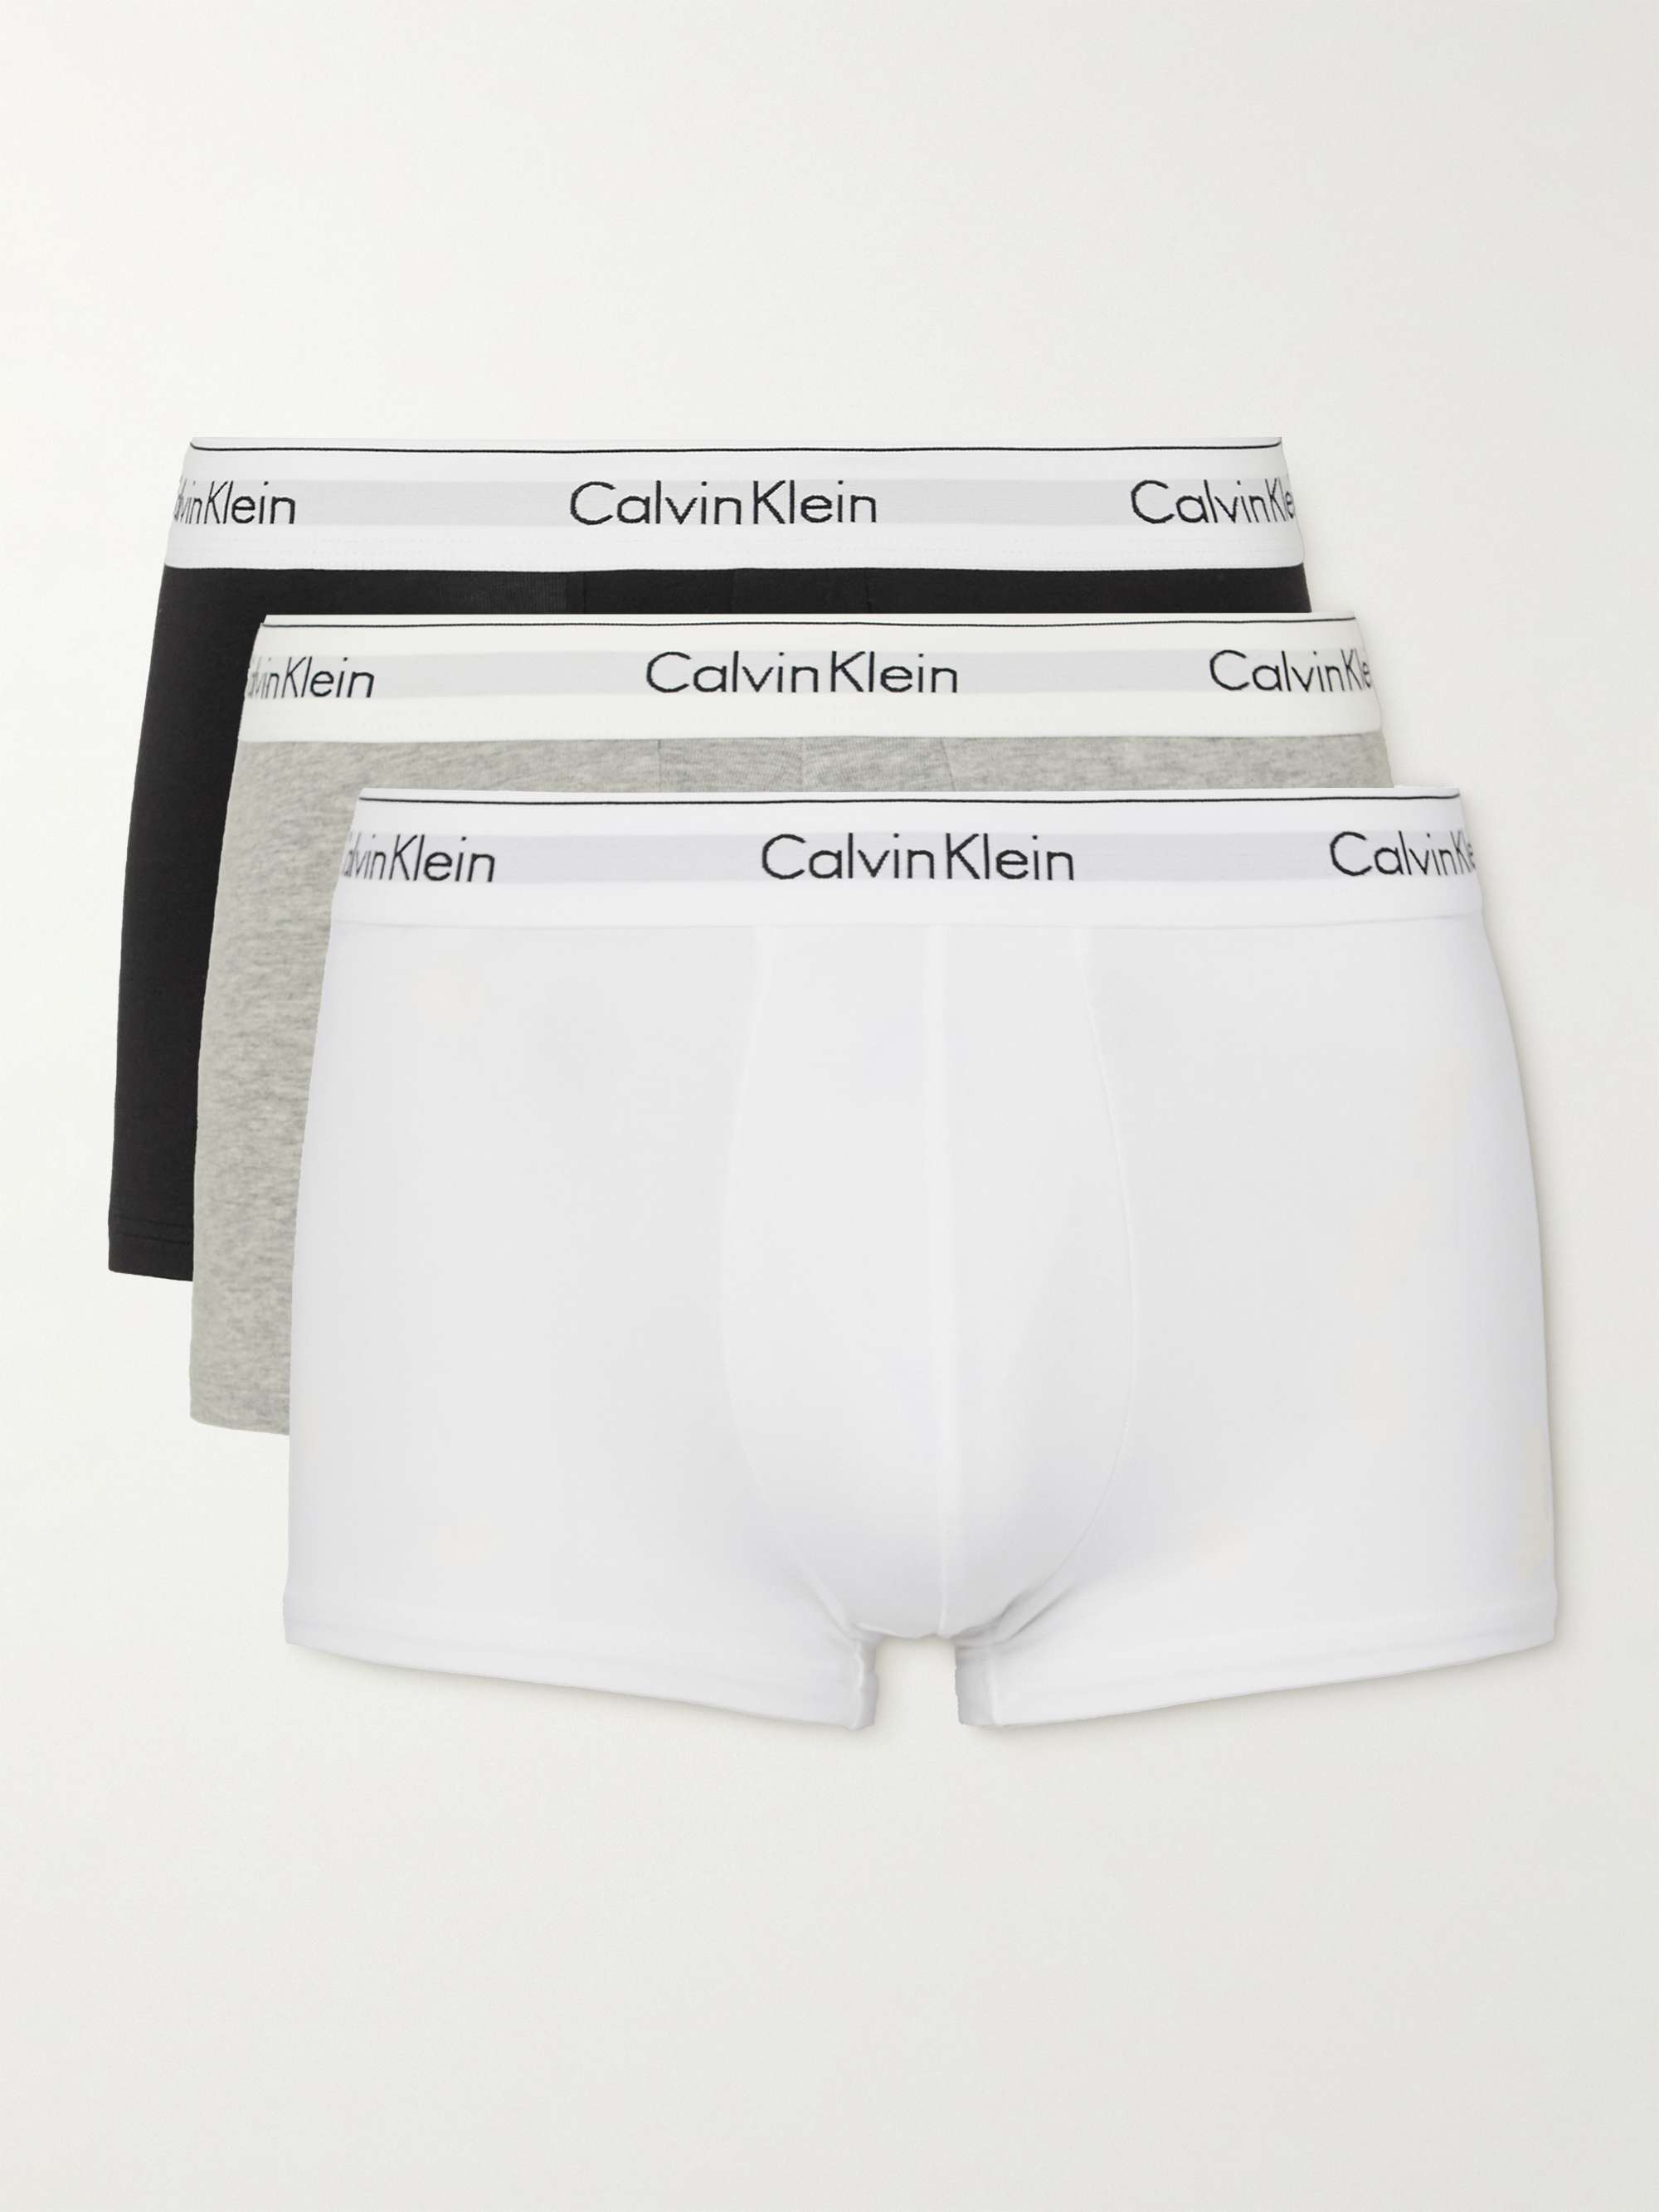 Mens Calvin Klein multi Modern Cotton Stretch Boxer Briefs (Pack of 3)